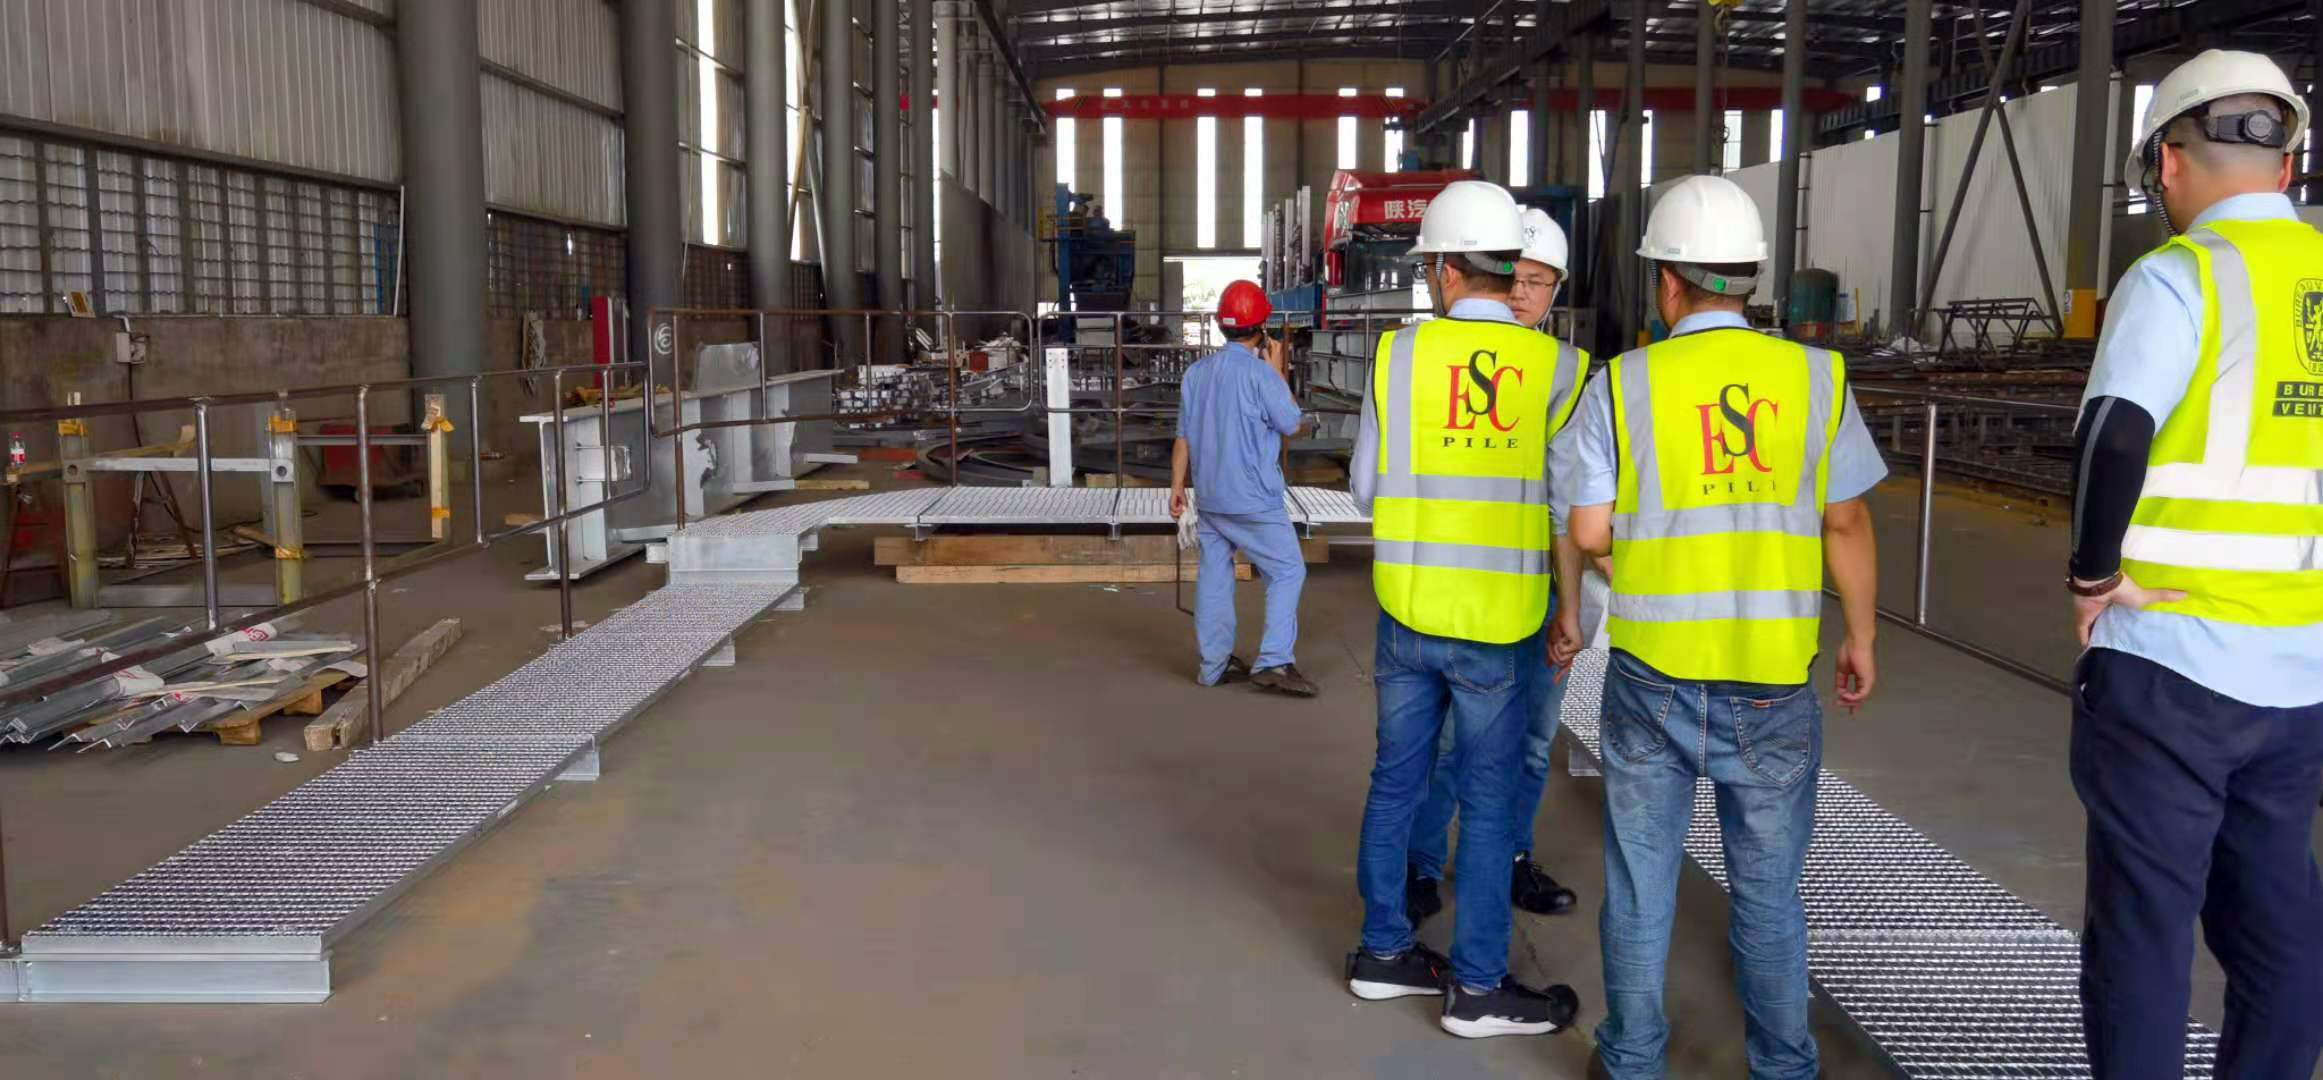 Steel bridge platform - Fabricated steel platform structure inspection